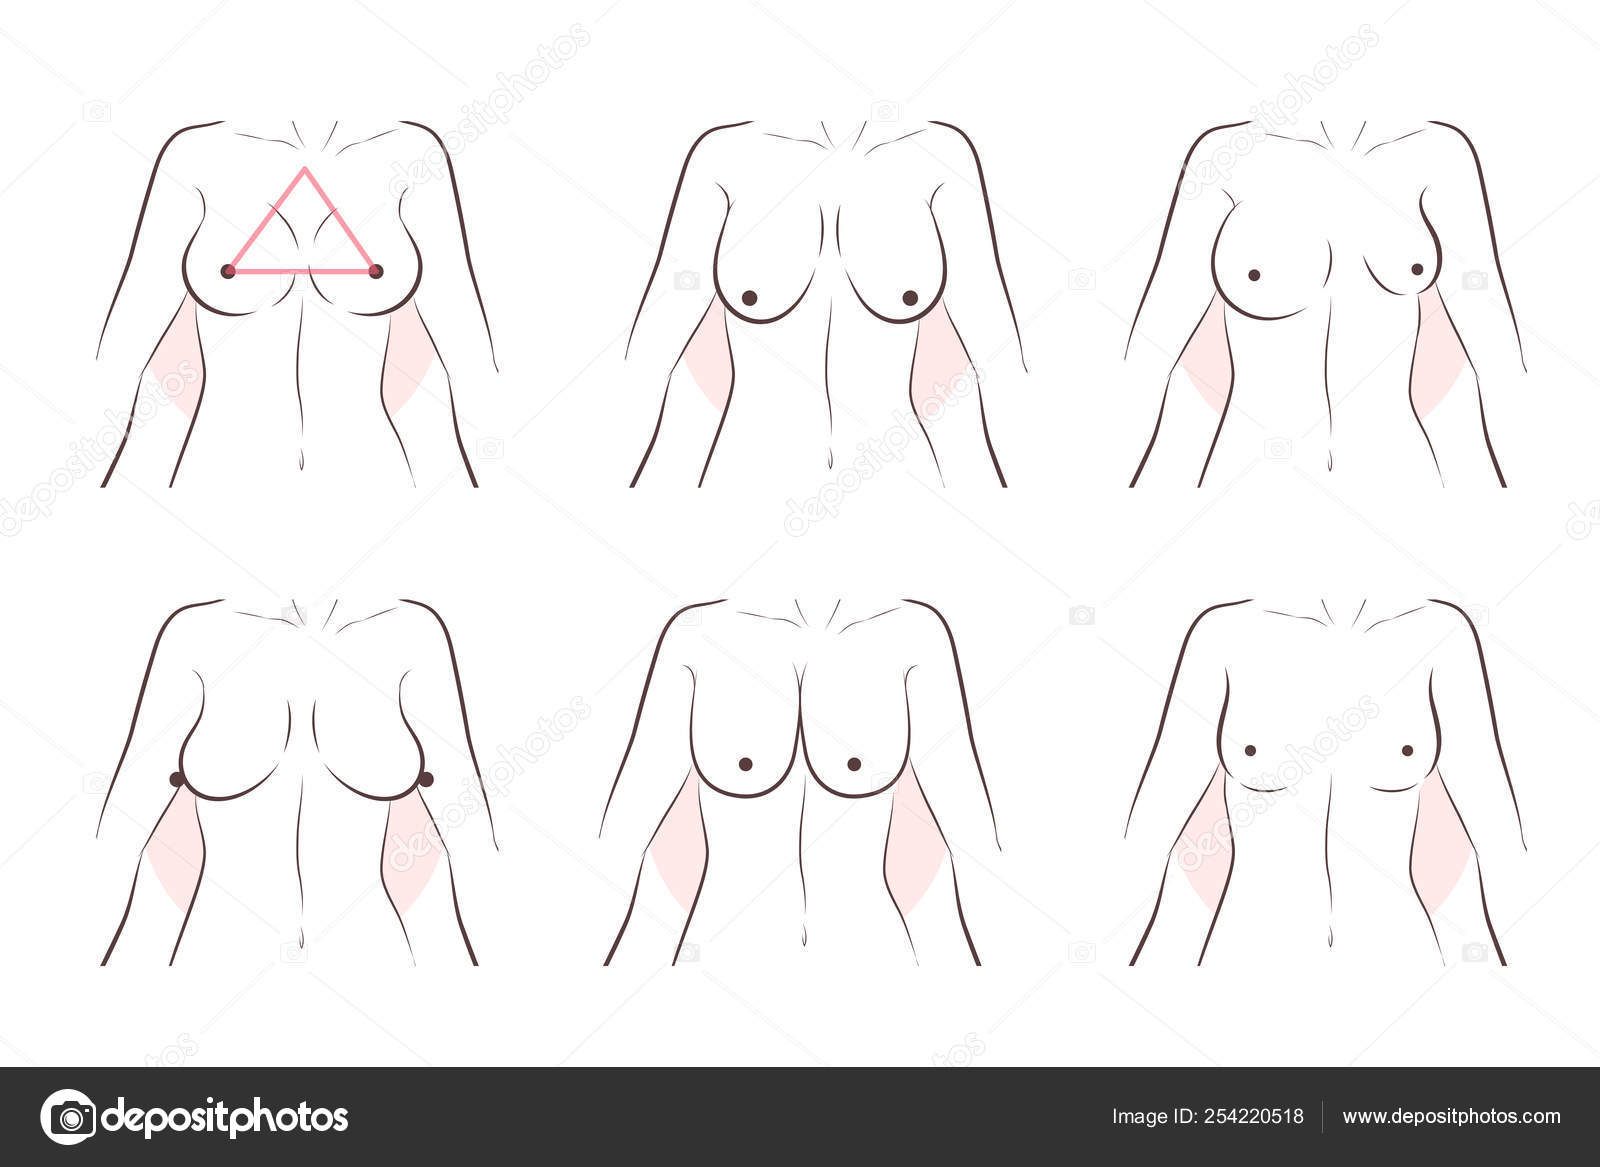 https://st4.depositphotos.com/11088892/25422/v/1600/depositphotos_254220518-stock-illustration-cartoon-different-chest-shape.jpg